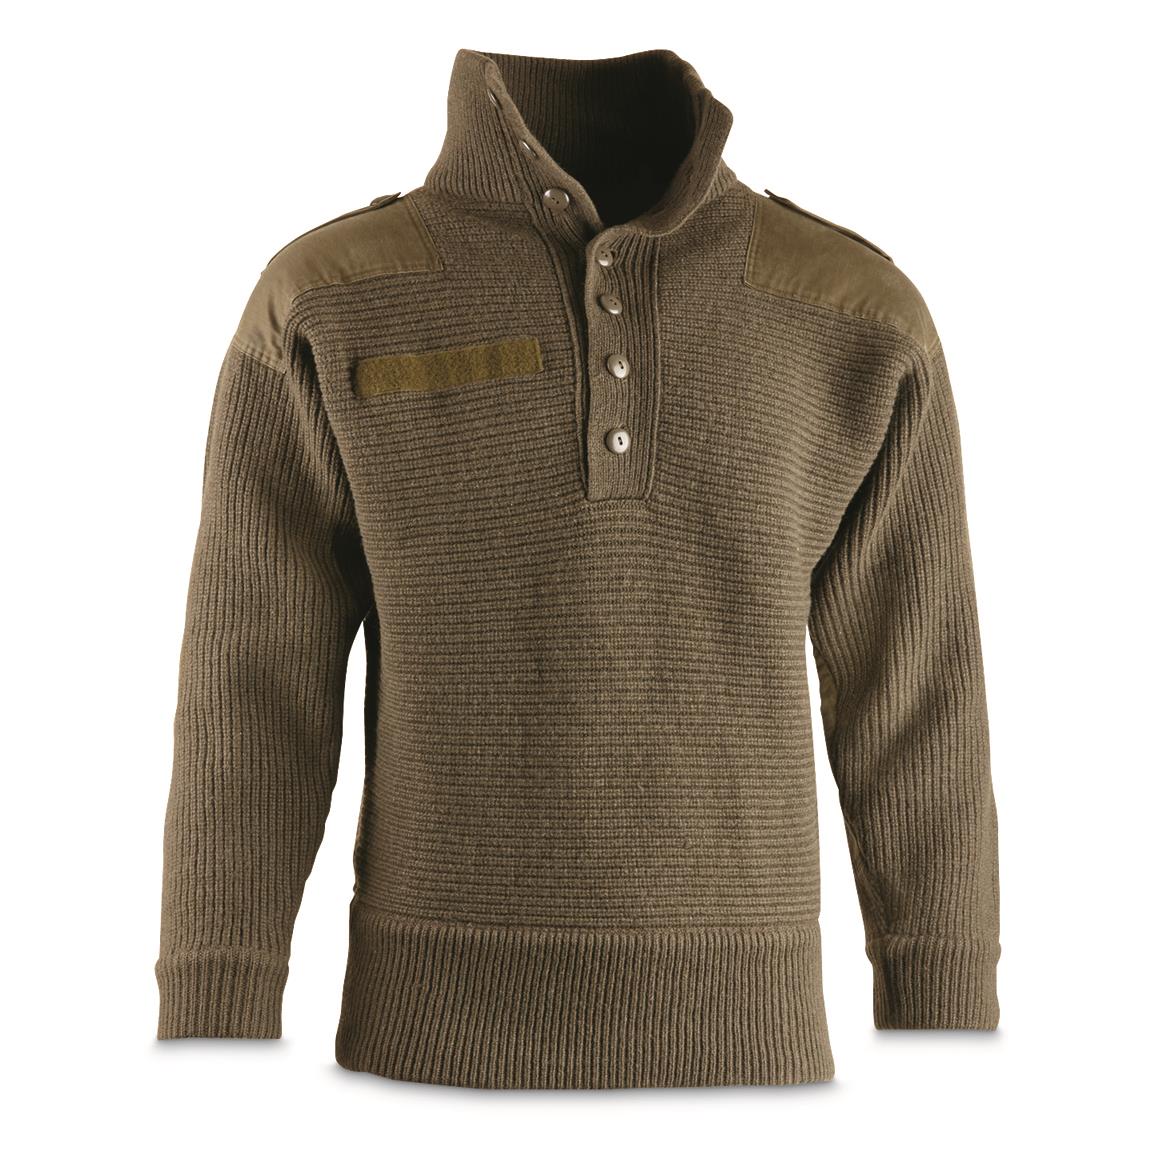 Austrian Military Surplus Heavyweight Wool Sweater, Used 711721